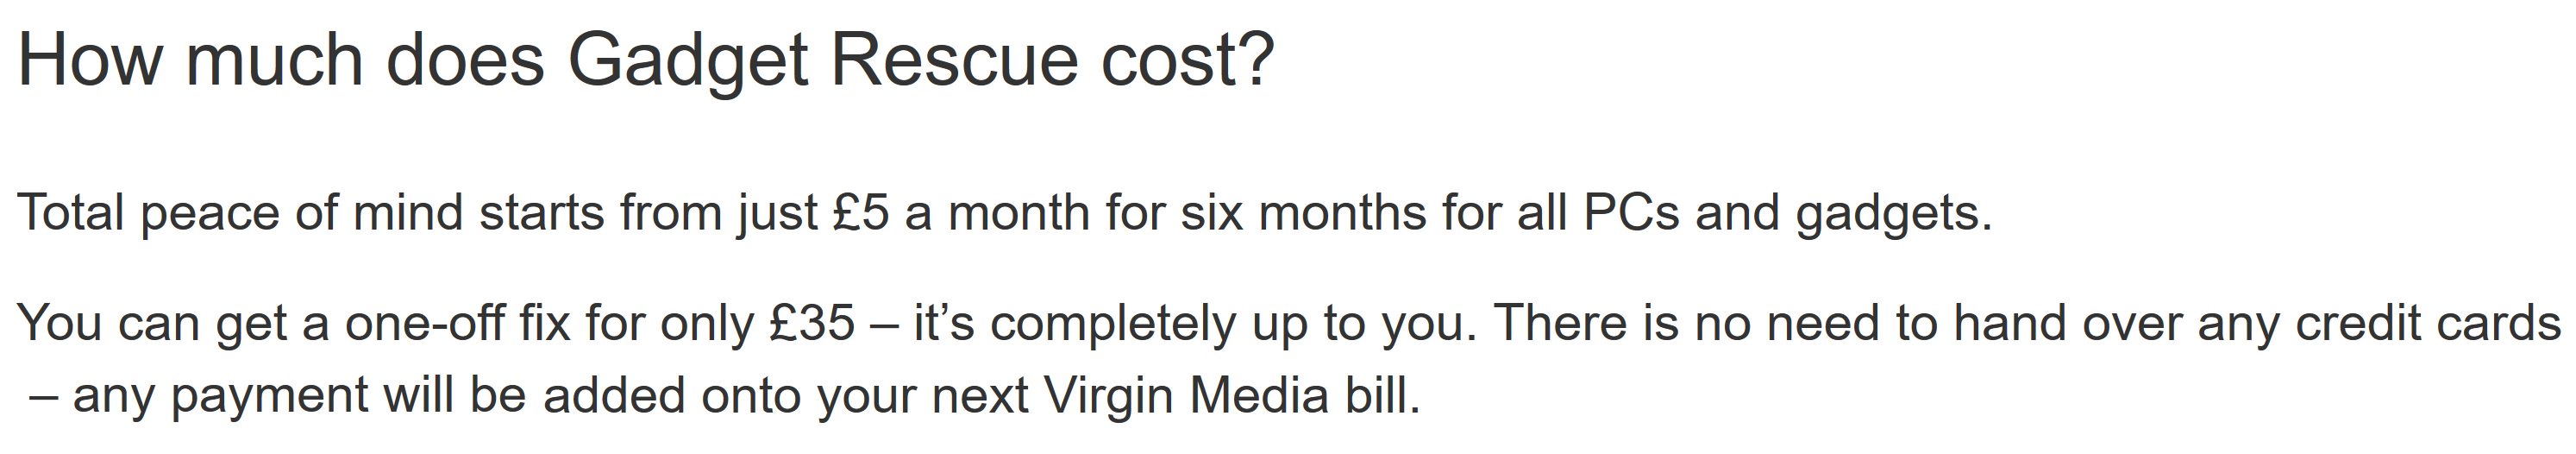 Virgin Media's Gadget Rescue Cost